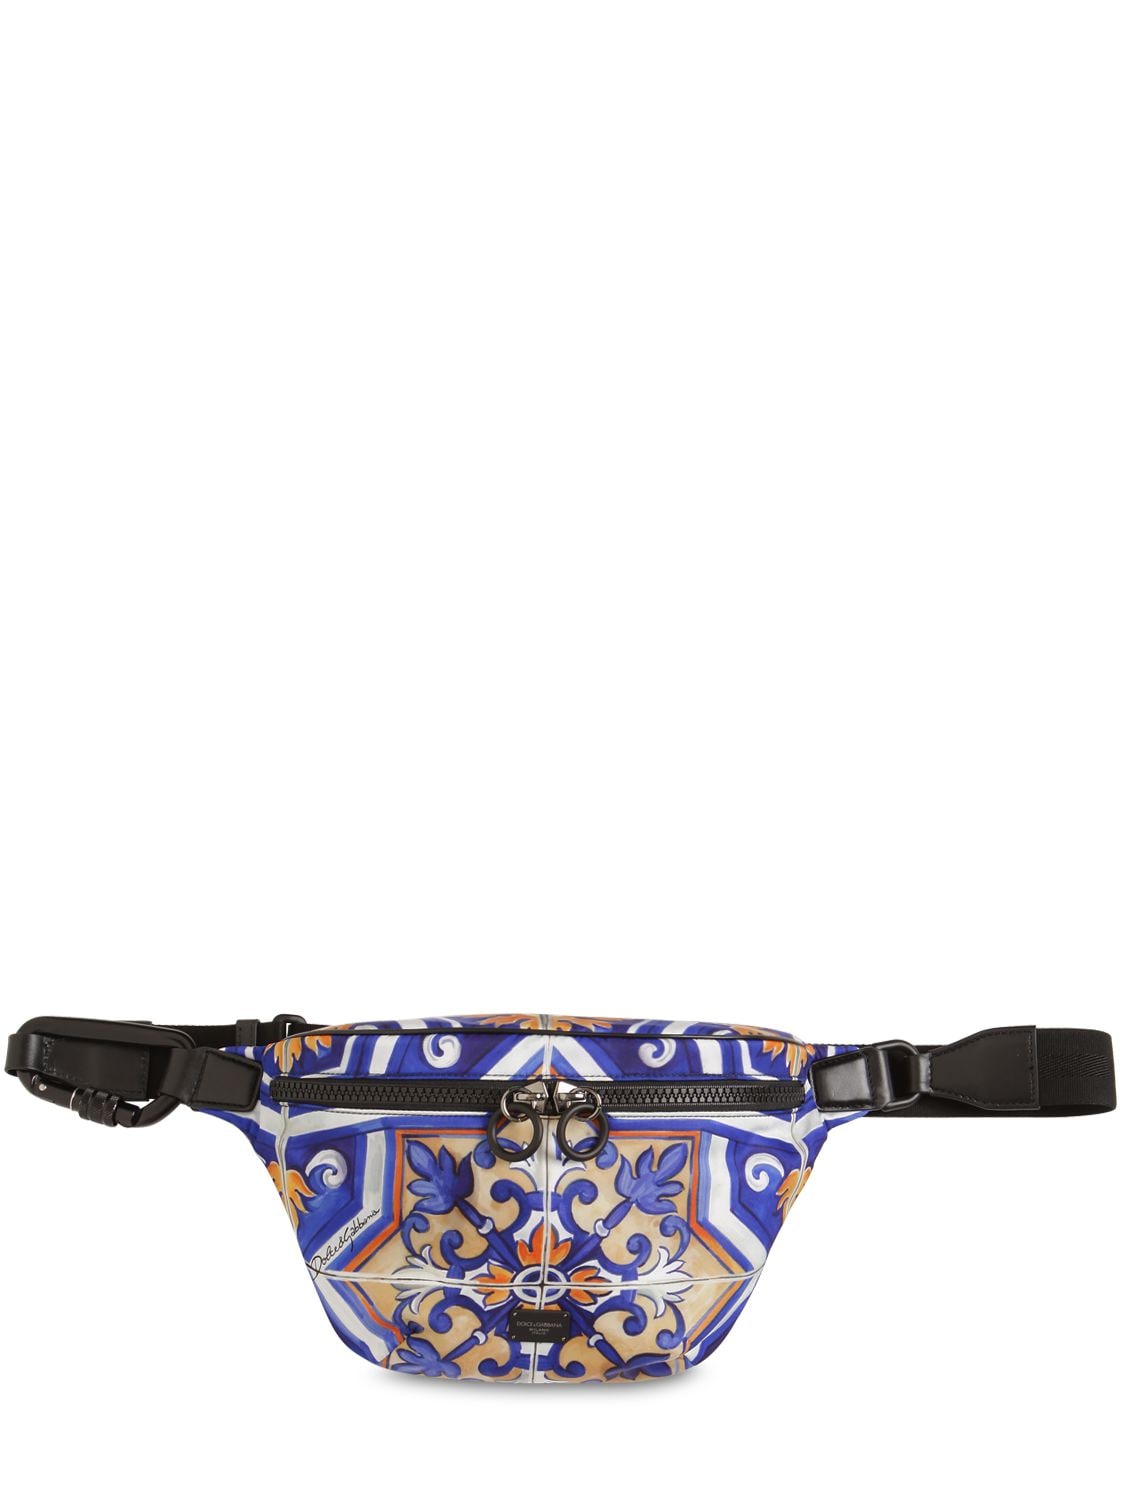 Dolce & Gabbana Maiolica Print Nylon & Leather Belt Bag In Blue